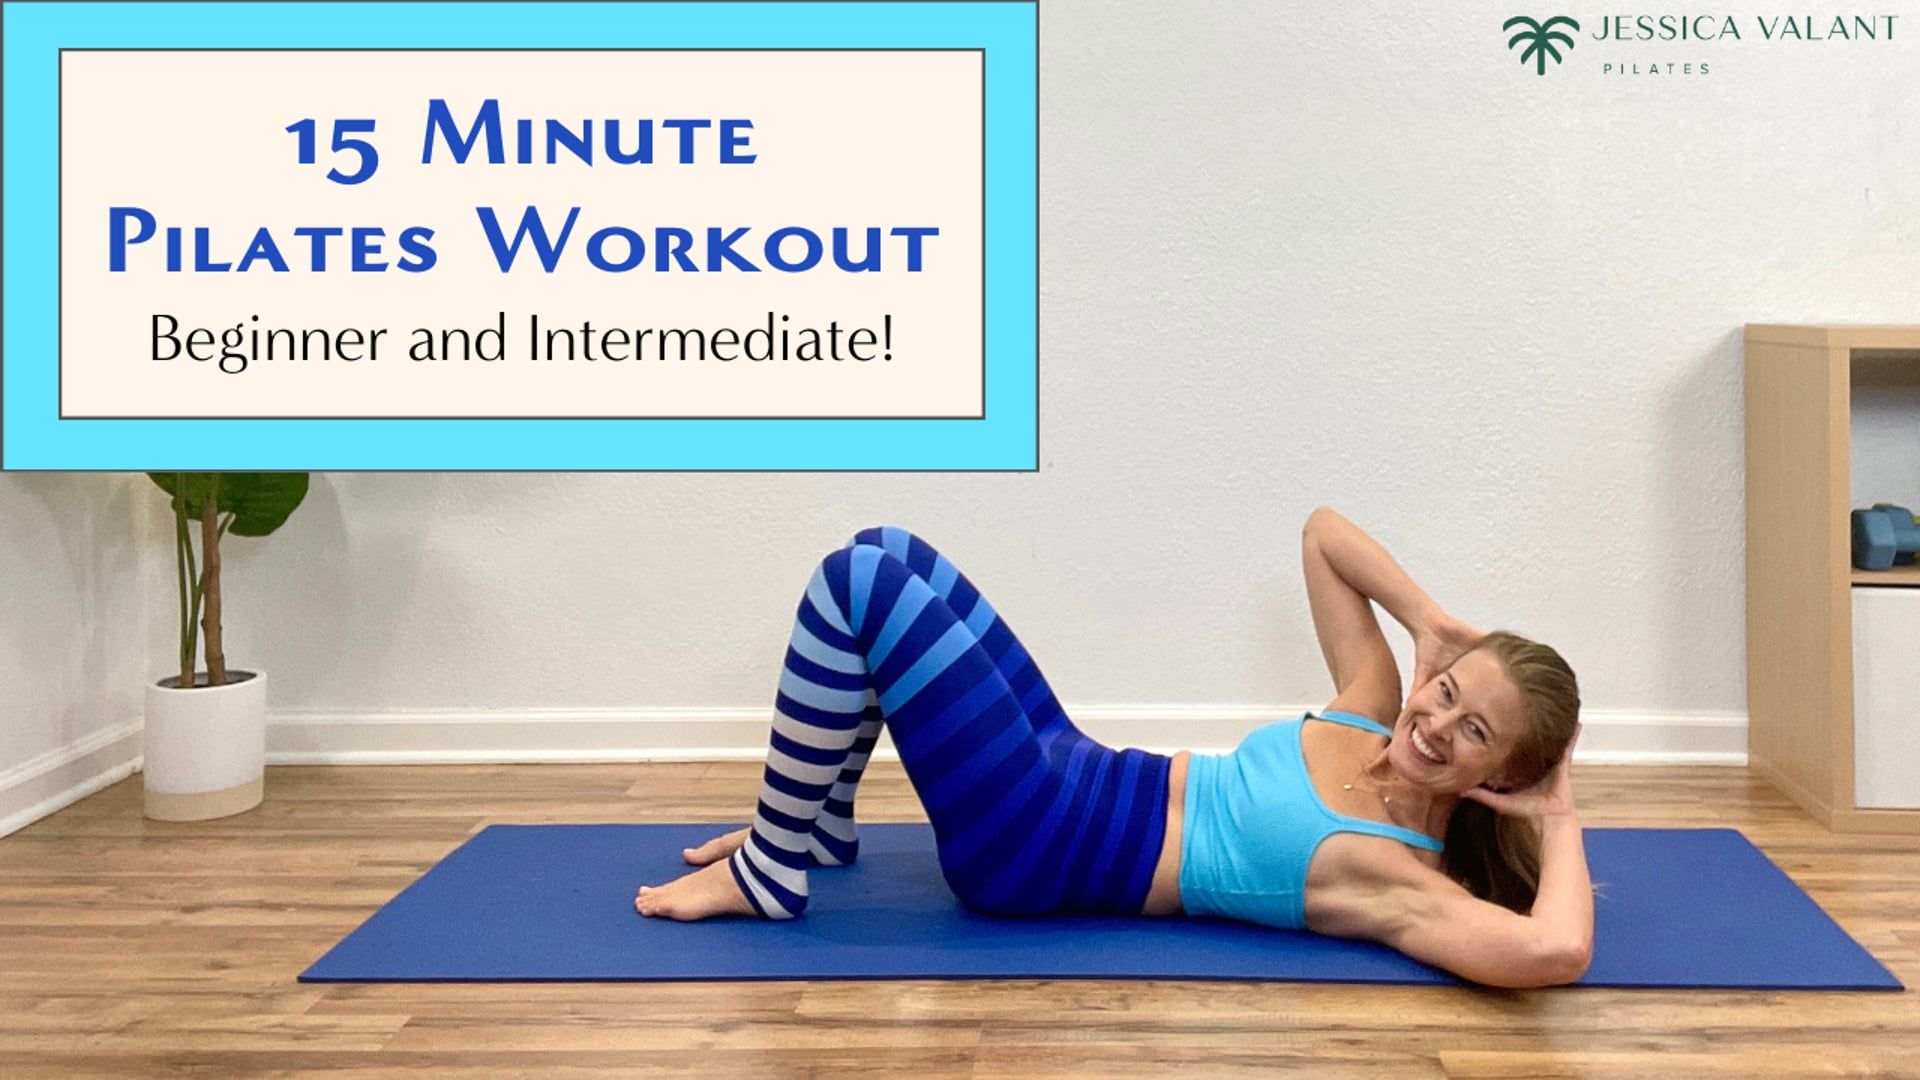 15 Minute Pilates Workout - Beginner & Intermediate - Jessica Valant Pilates